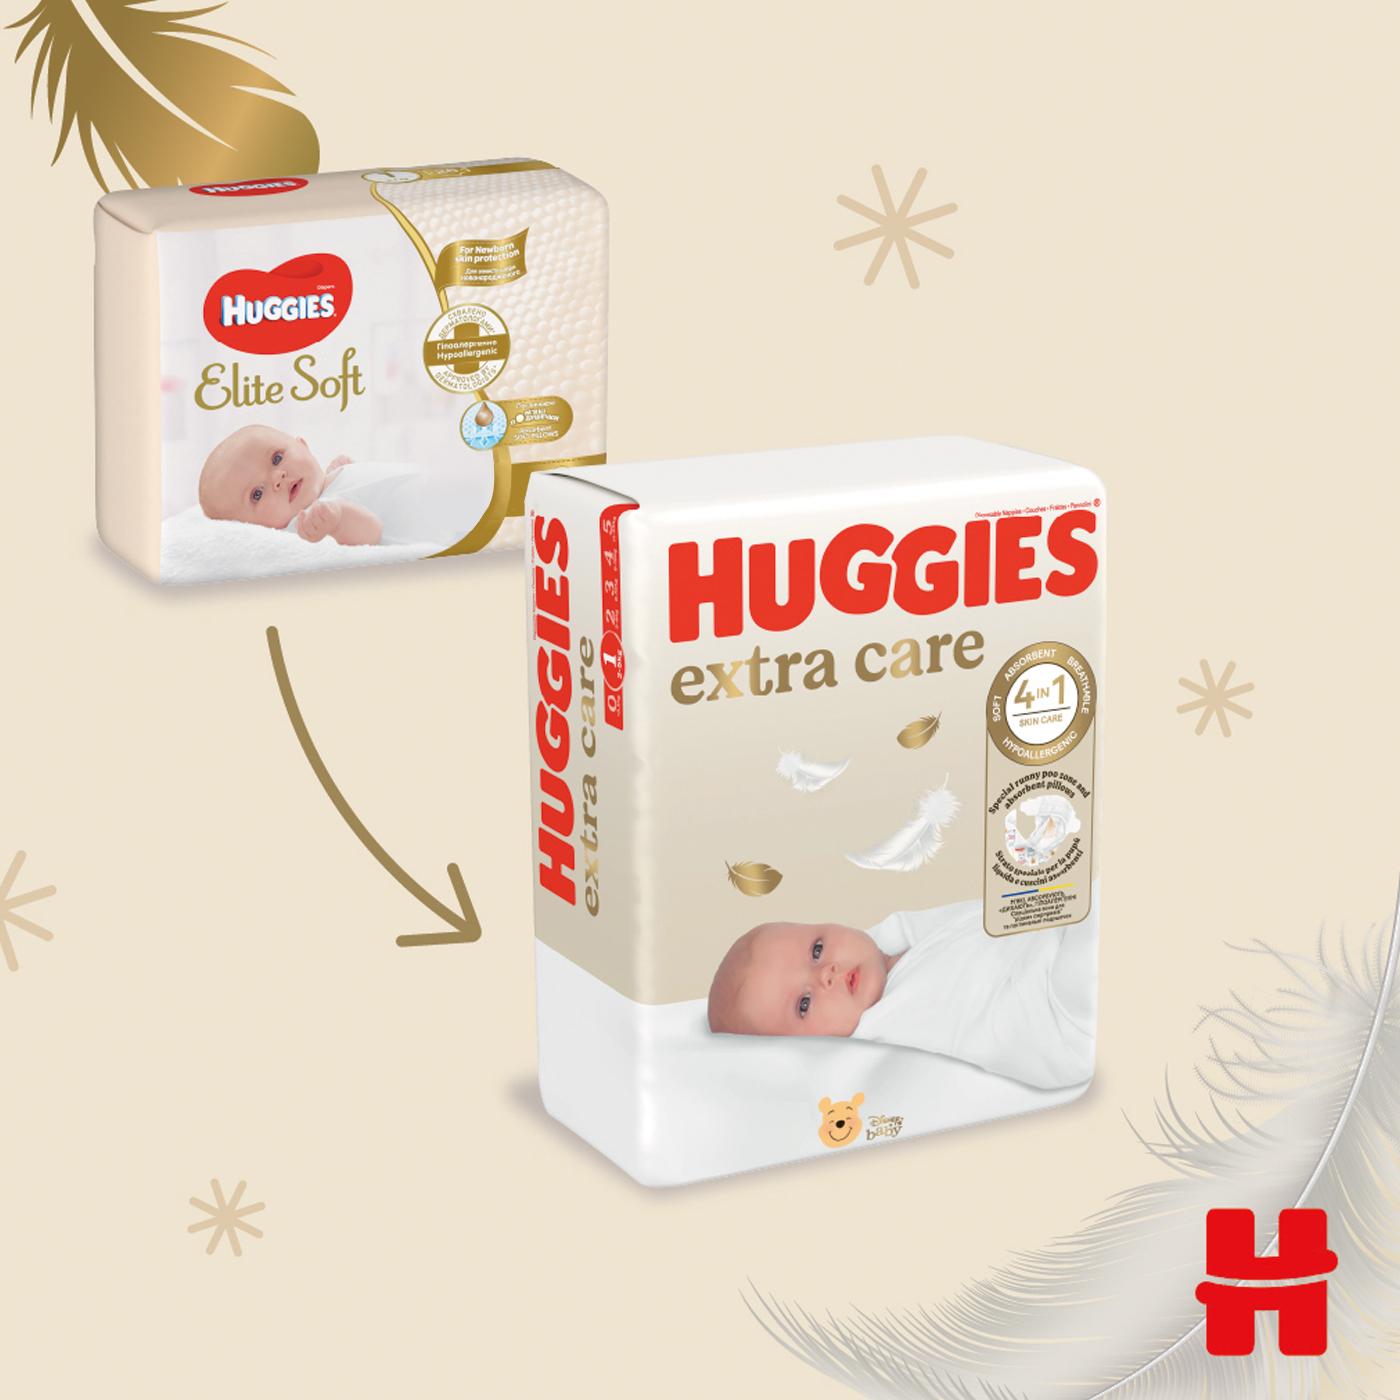 Selected image for HUGGIES Elite Soft Mega 4 Pelene, 8-14 kg, 60/1